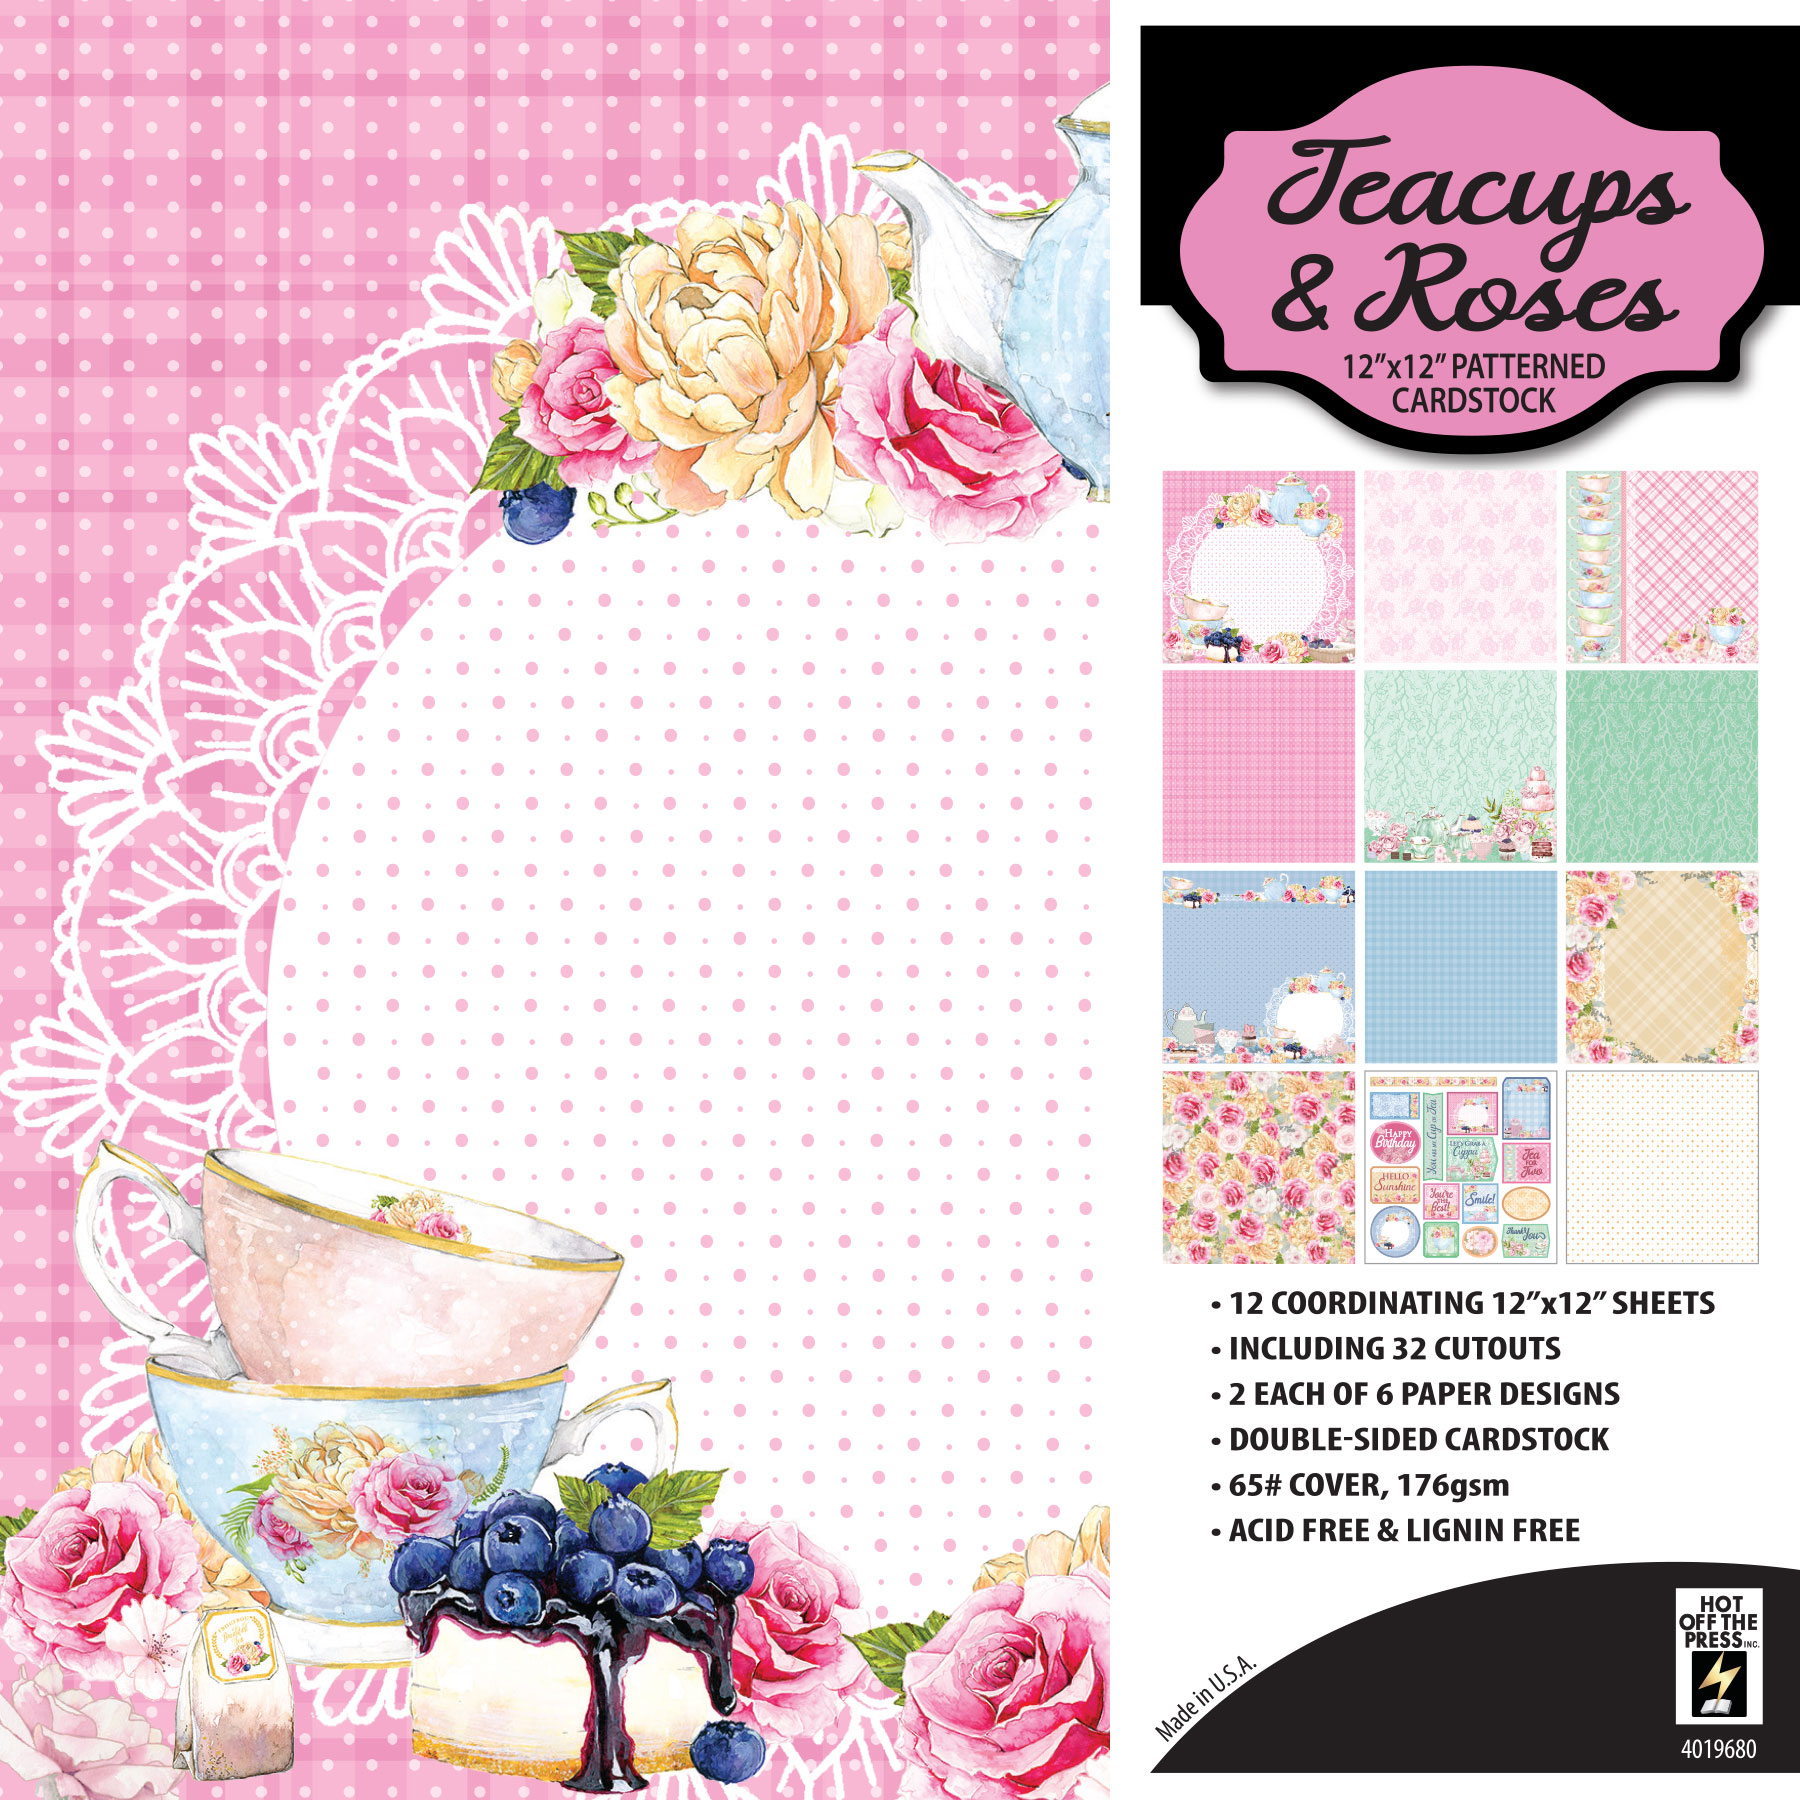 Teacups & Roses 12x12 Patterned Cardstock